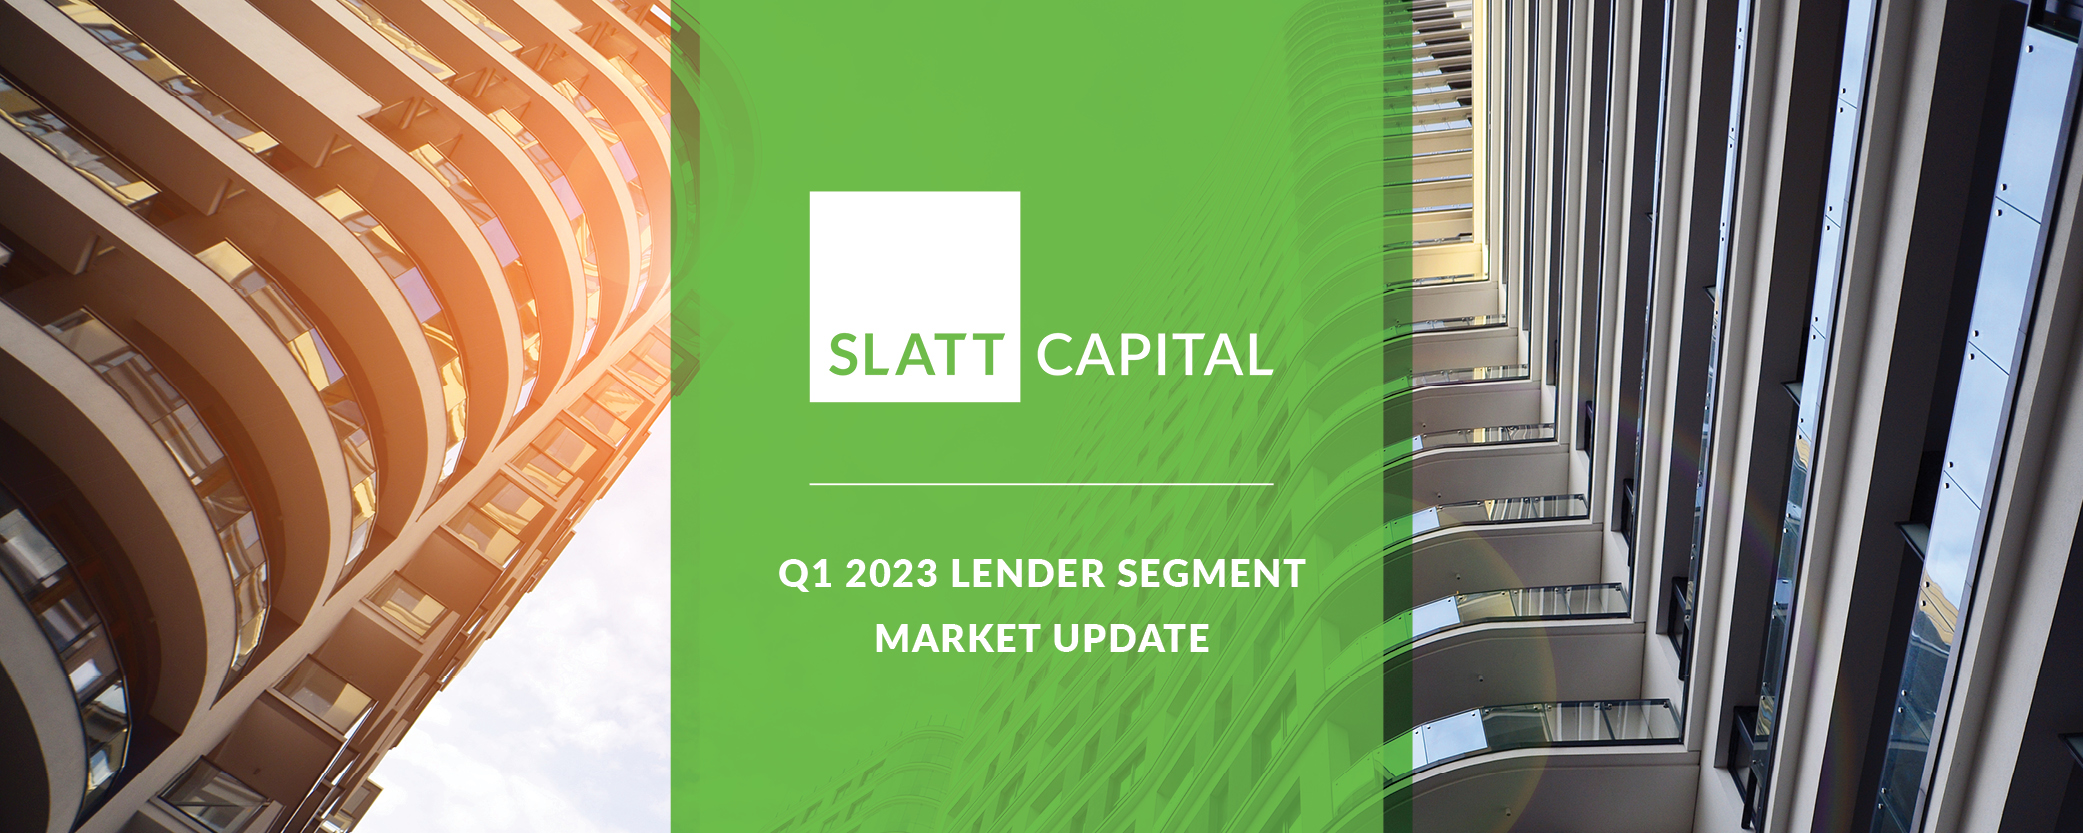 Q1 2023 lender segment market update